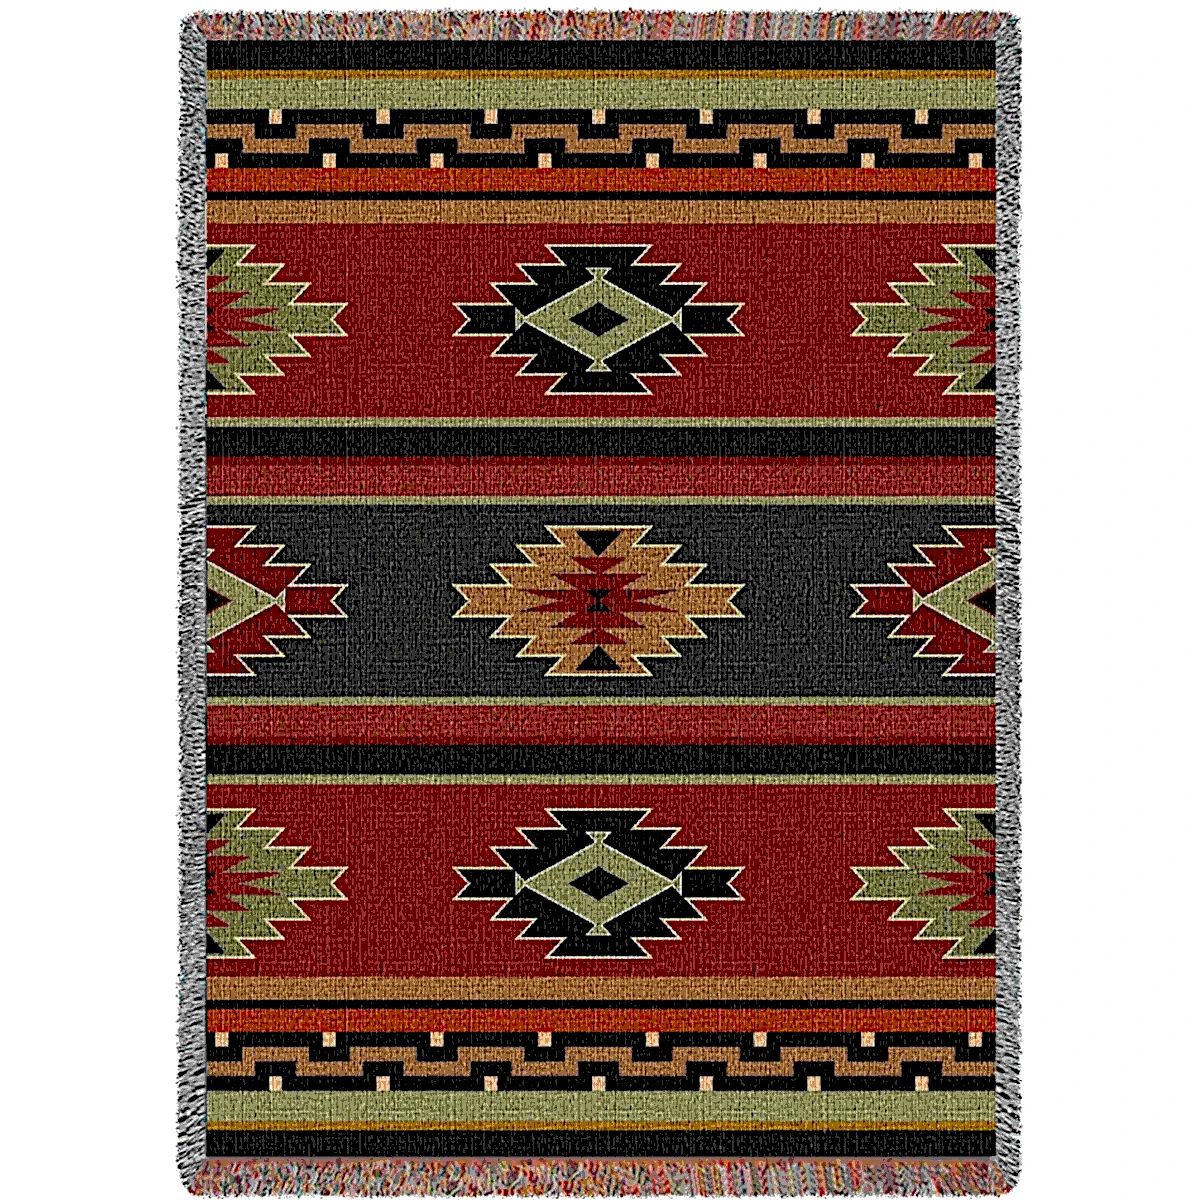 https://www.joewilcoxsedona.com/wp-content/uploads/2023/02/Kaibab-Decorative-Throw-Blanket.jpg